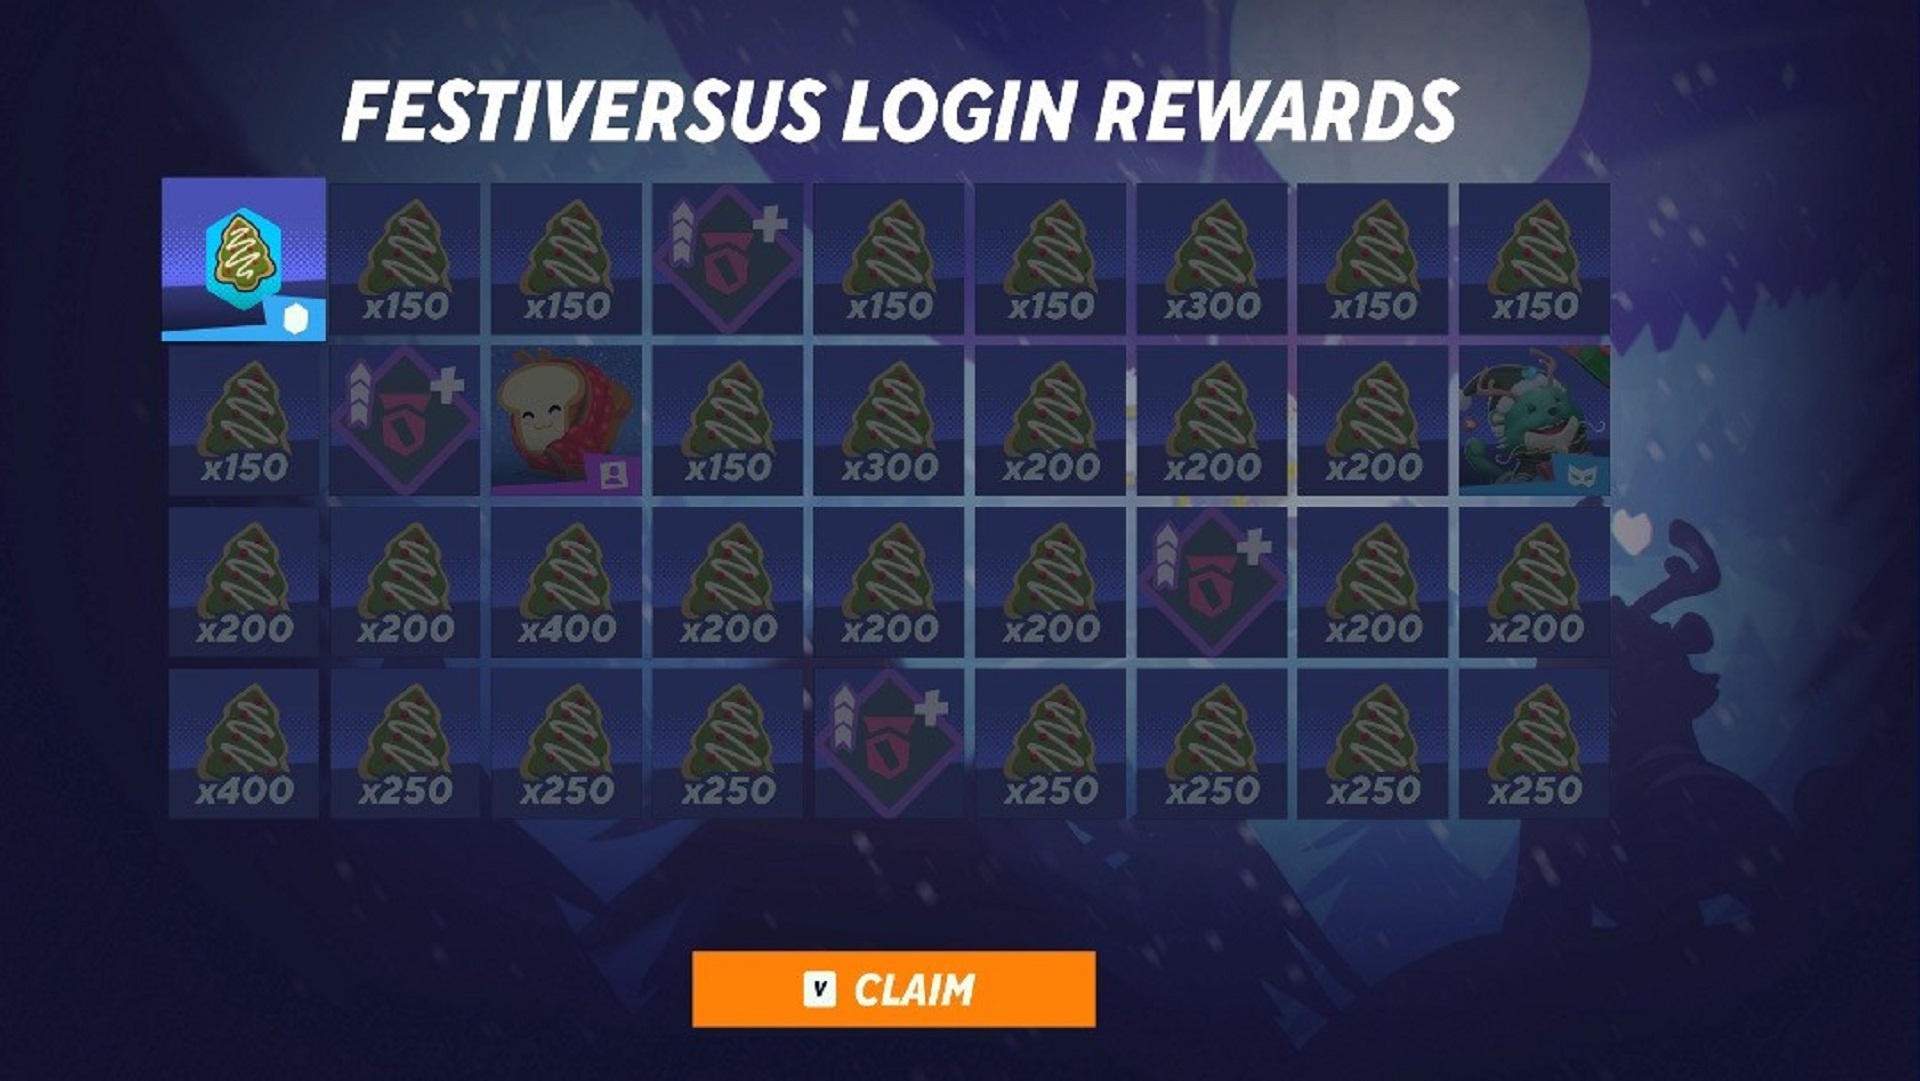 FestiVersus login rewards calendar